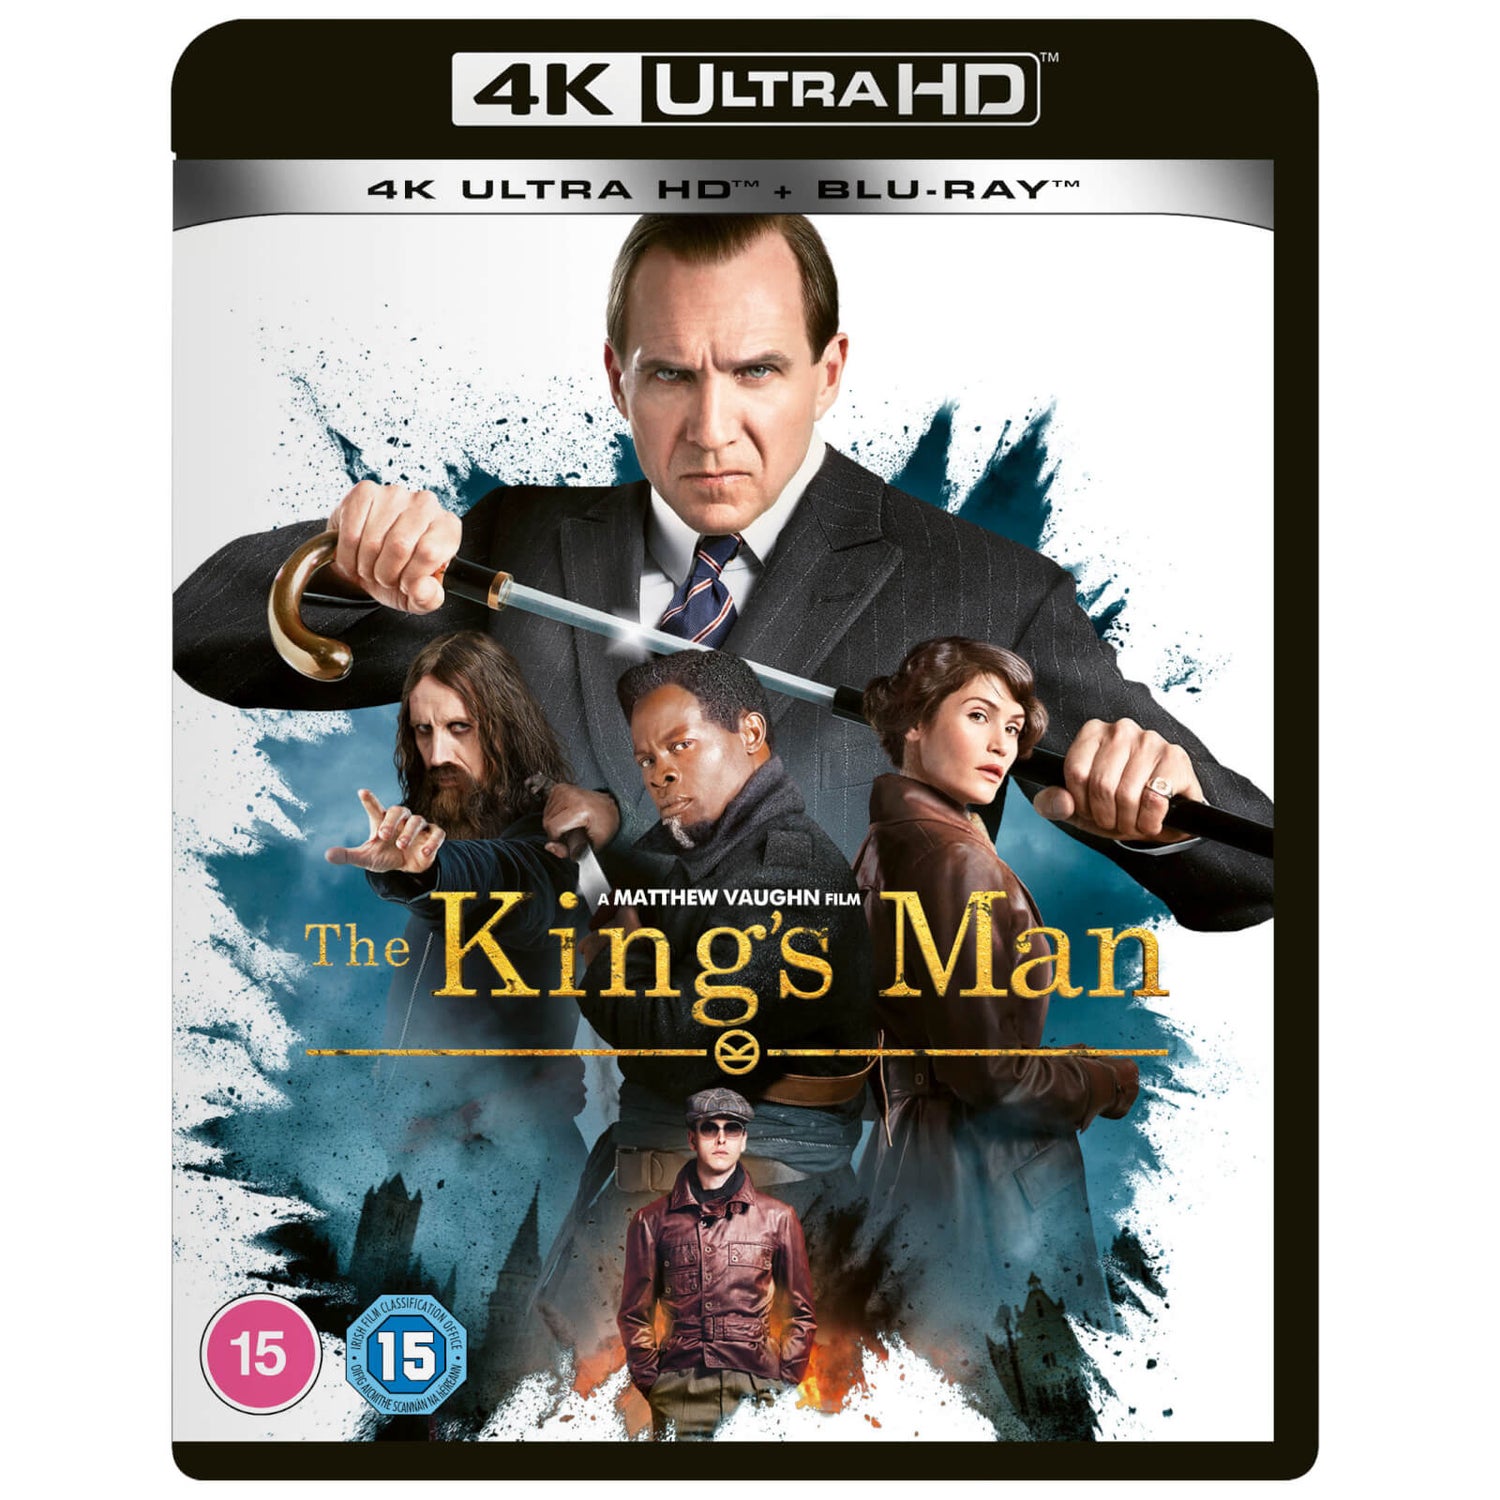 The King's Man - 4K Ultra HD